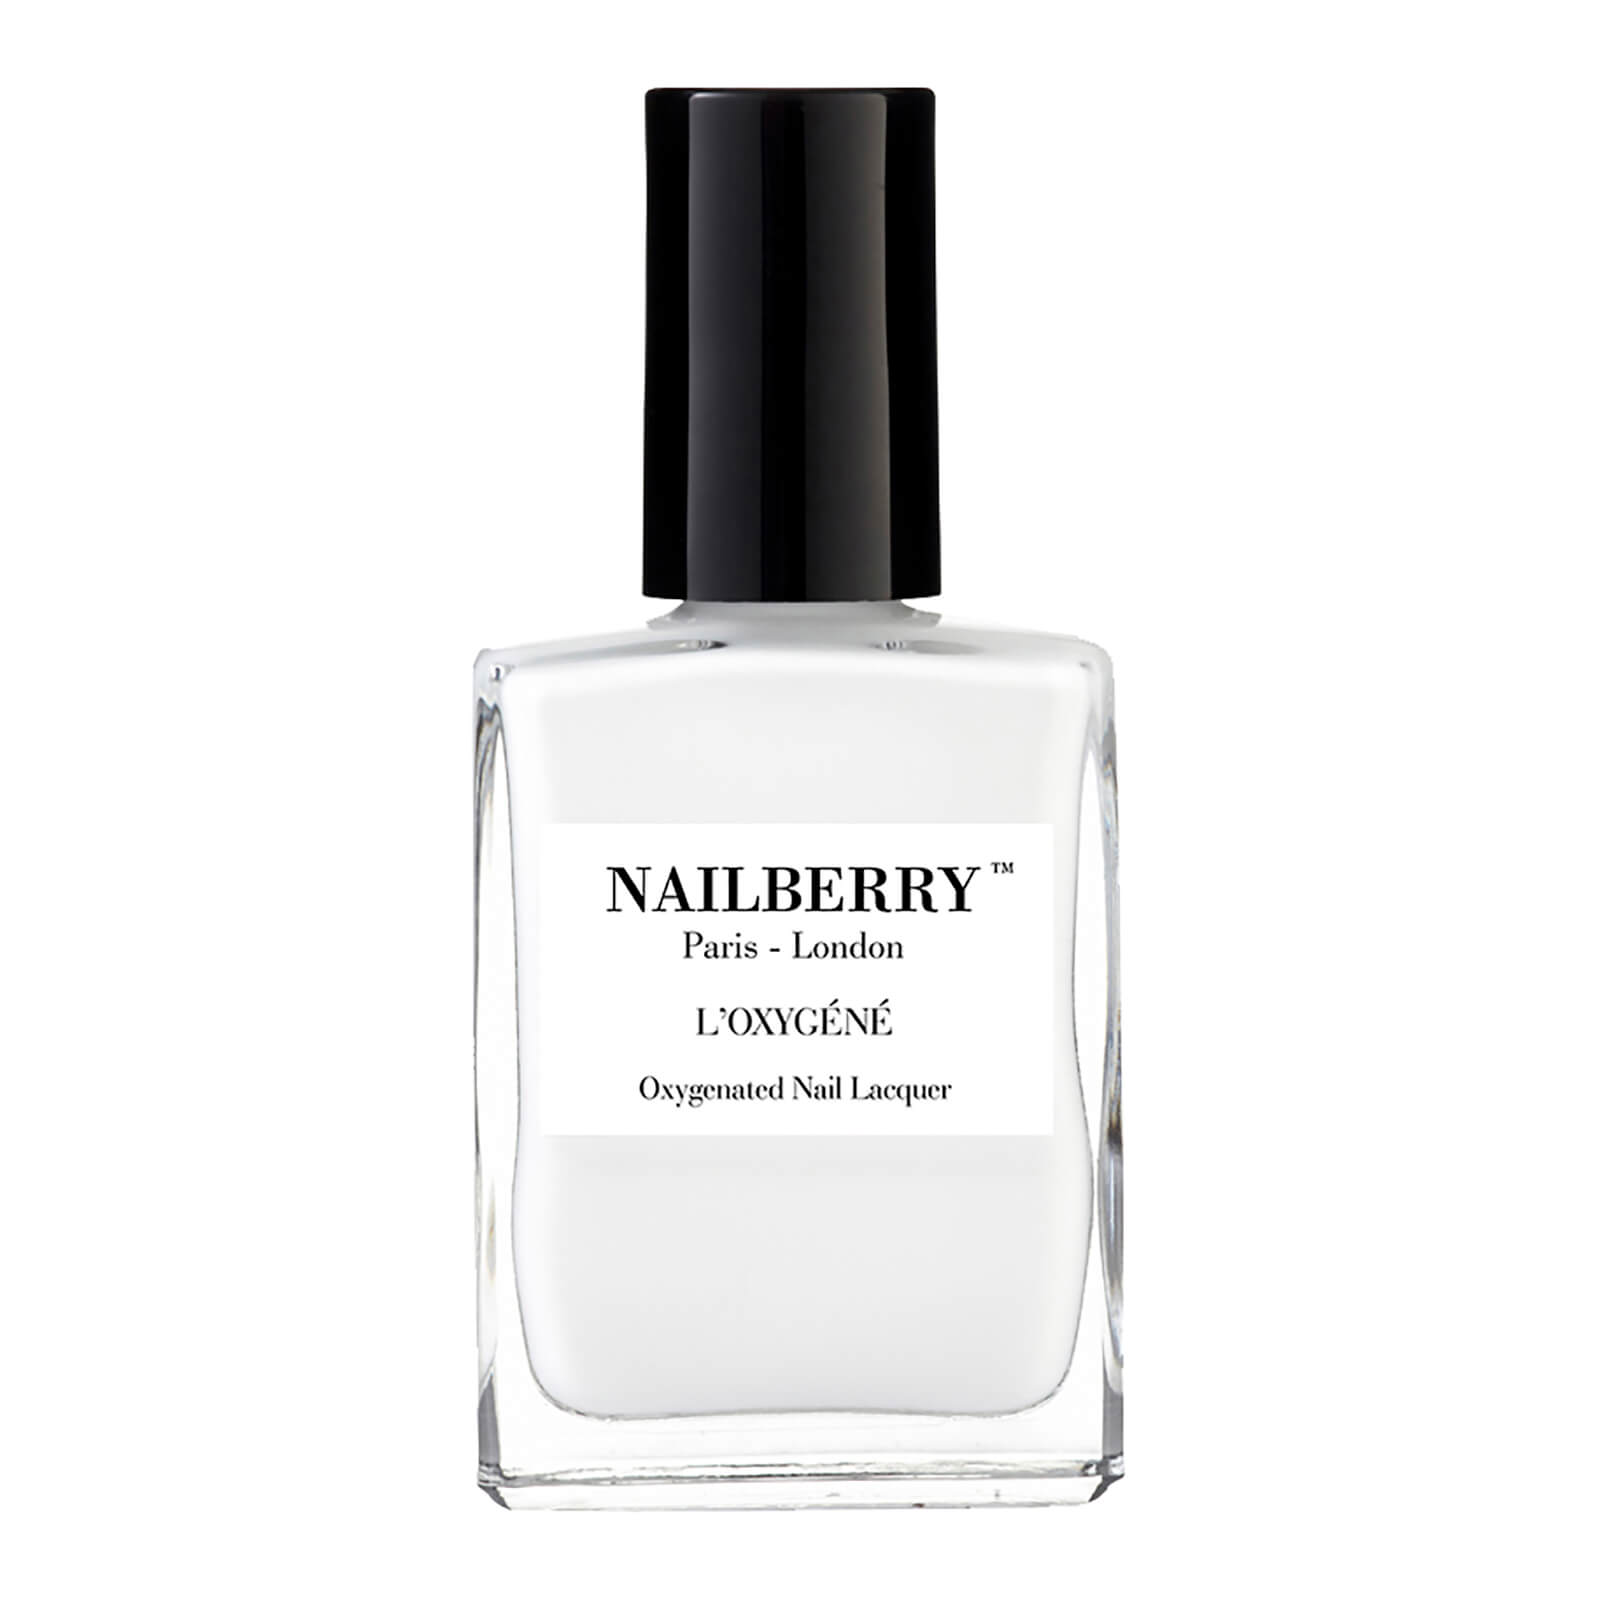 Nailberry white nail polish